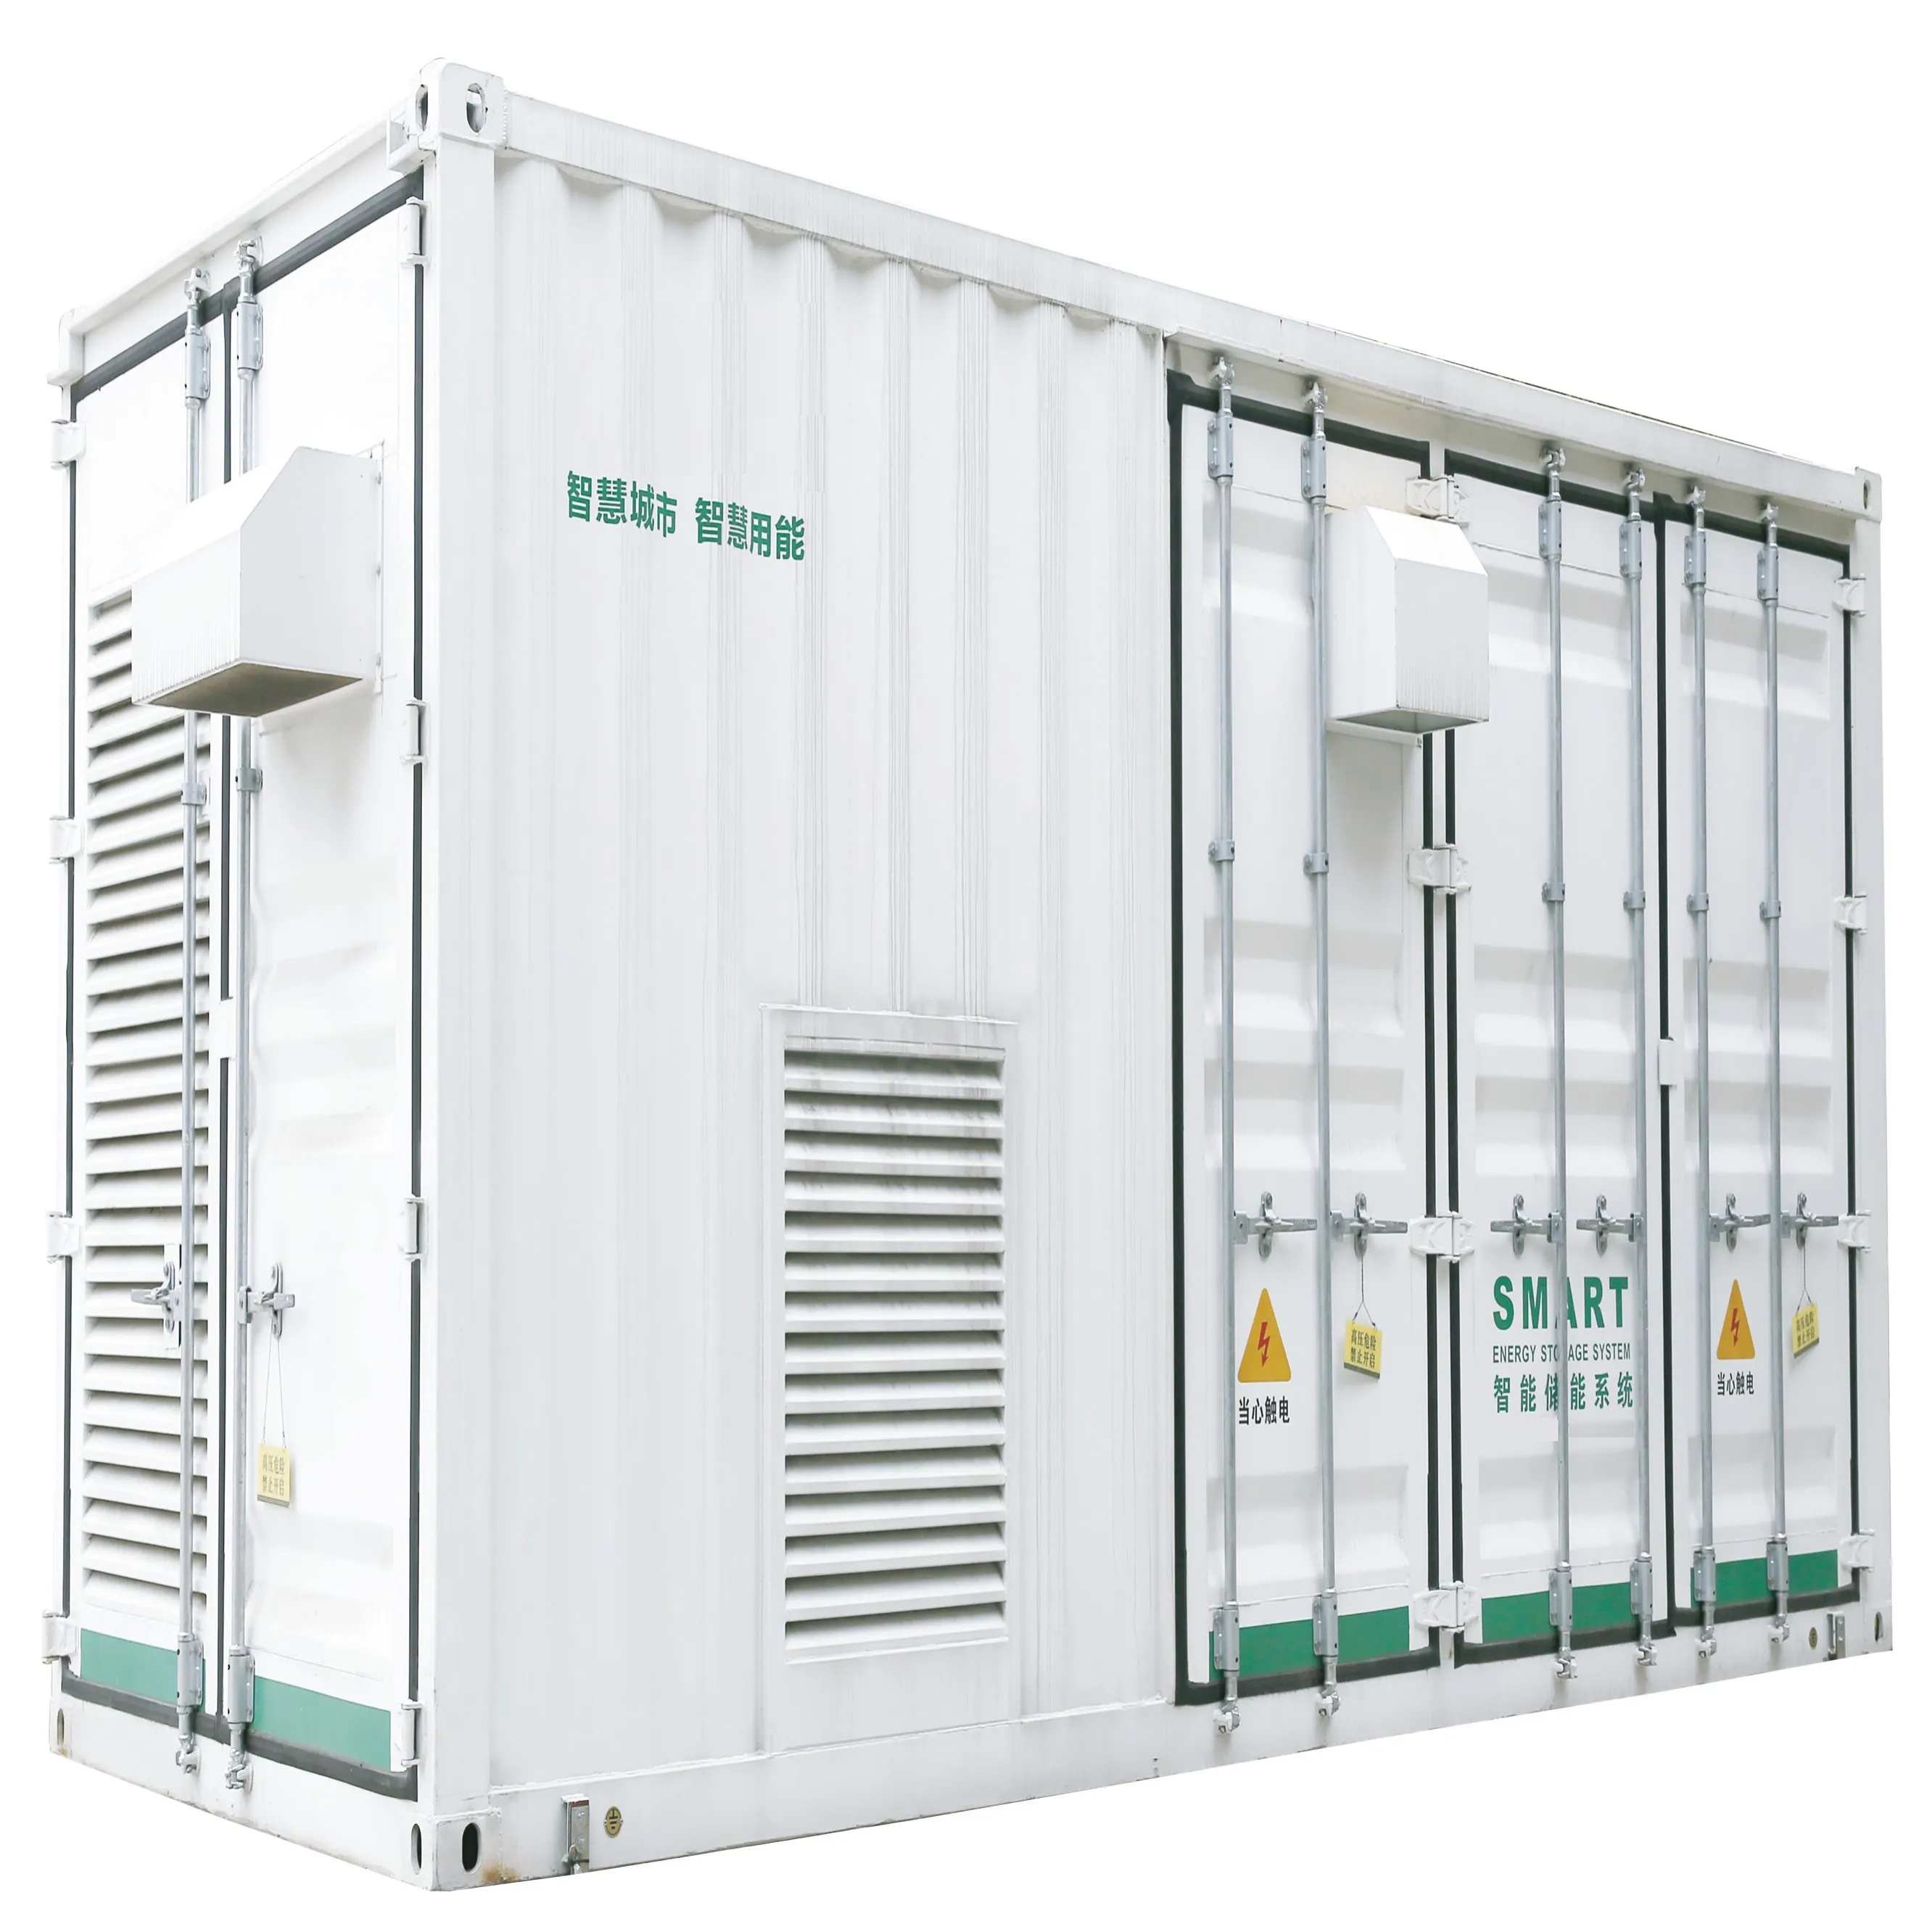 Sistema de armazenamento de energia inteligente de serviço integrado confiável e personalizável, recipiente de 20 pés